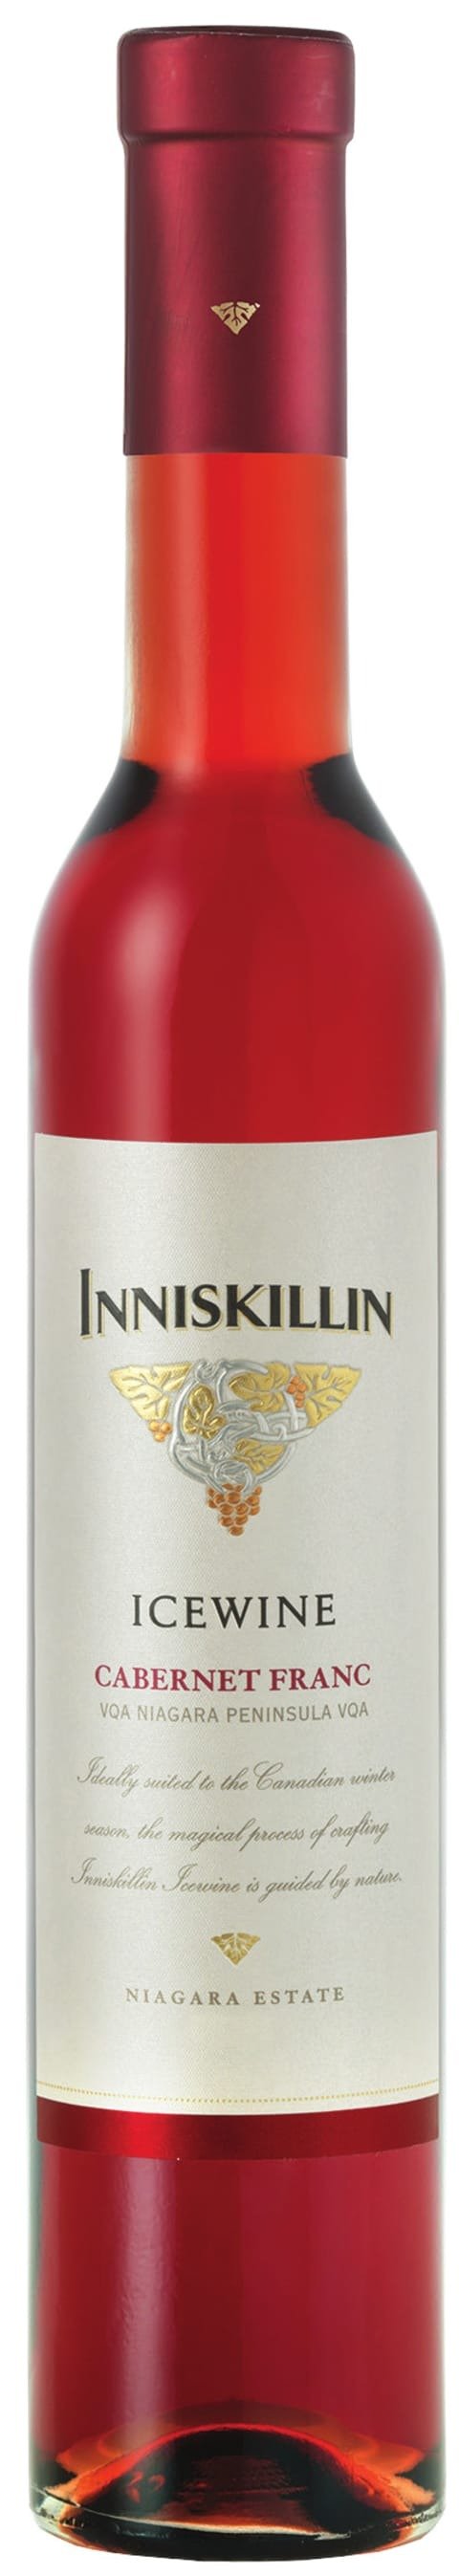 Inniskillin Cabernet Franc Icewine (375ML half-bottle) 2019